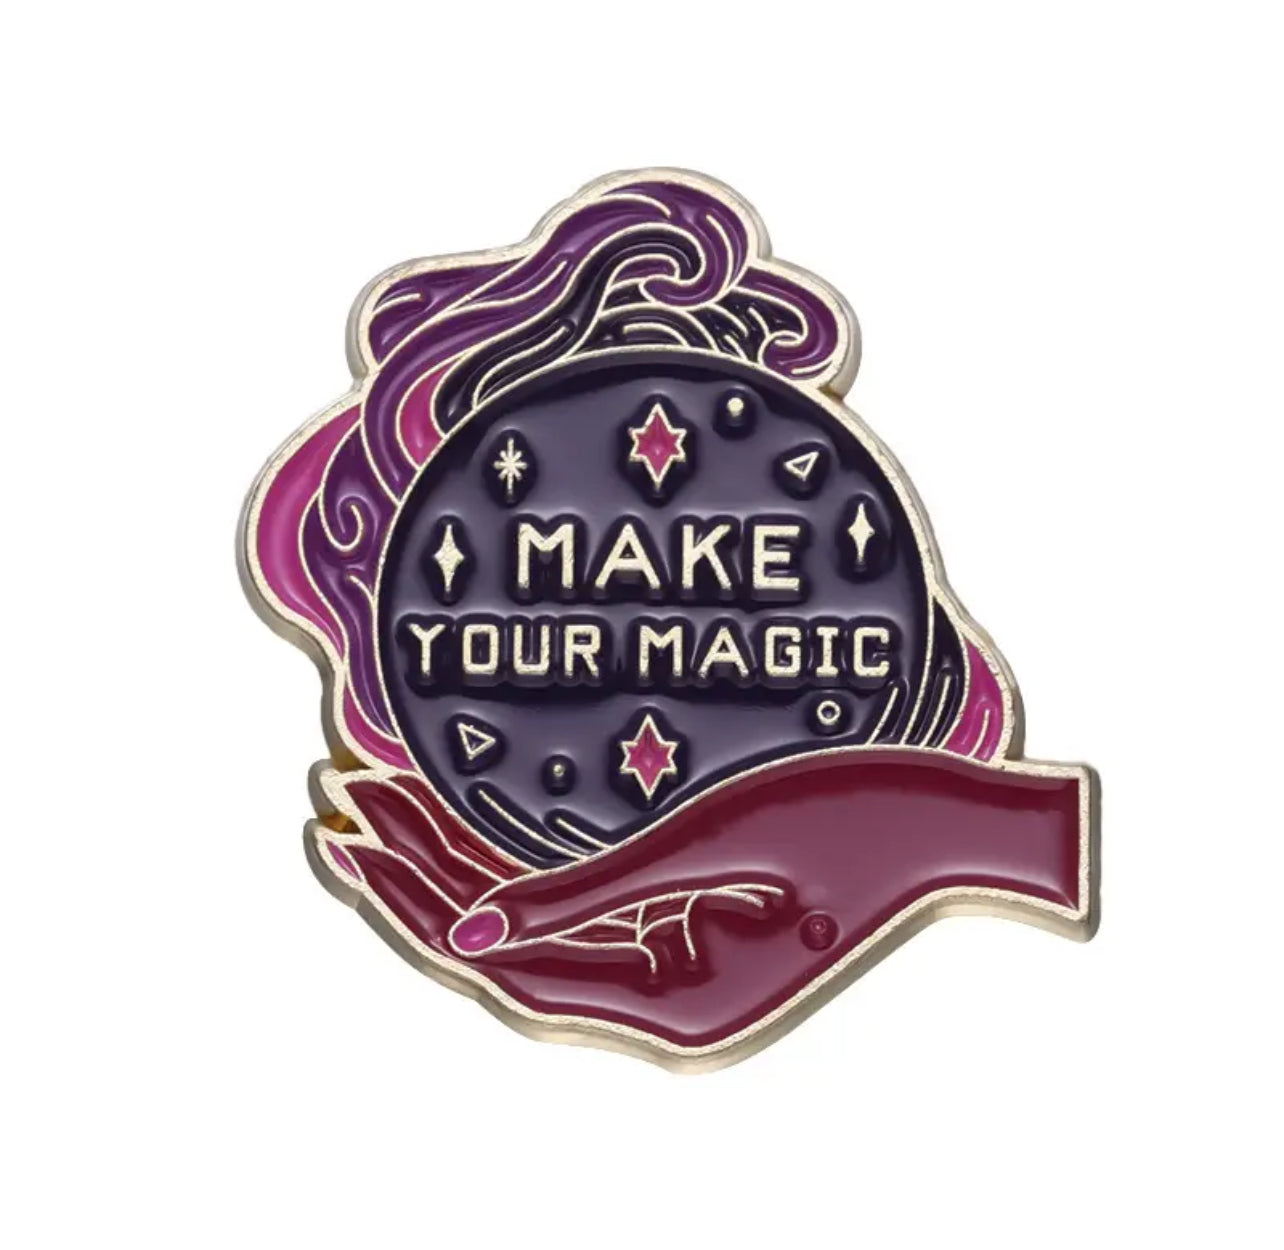 Make your magic